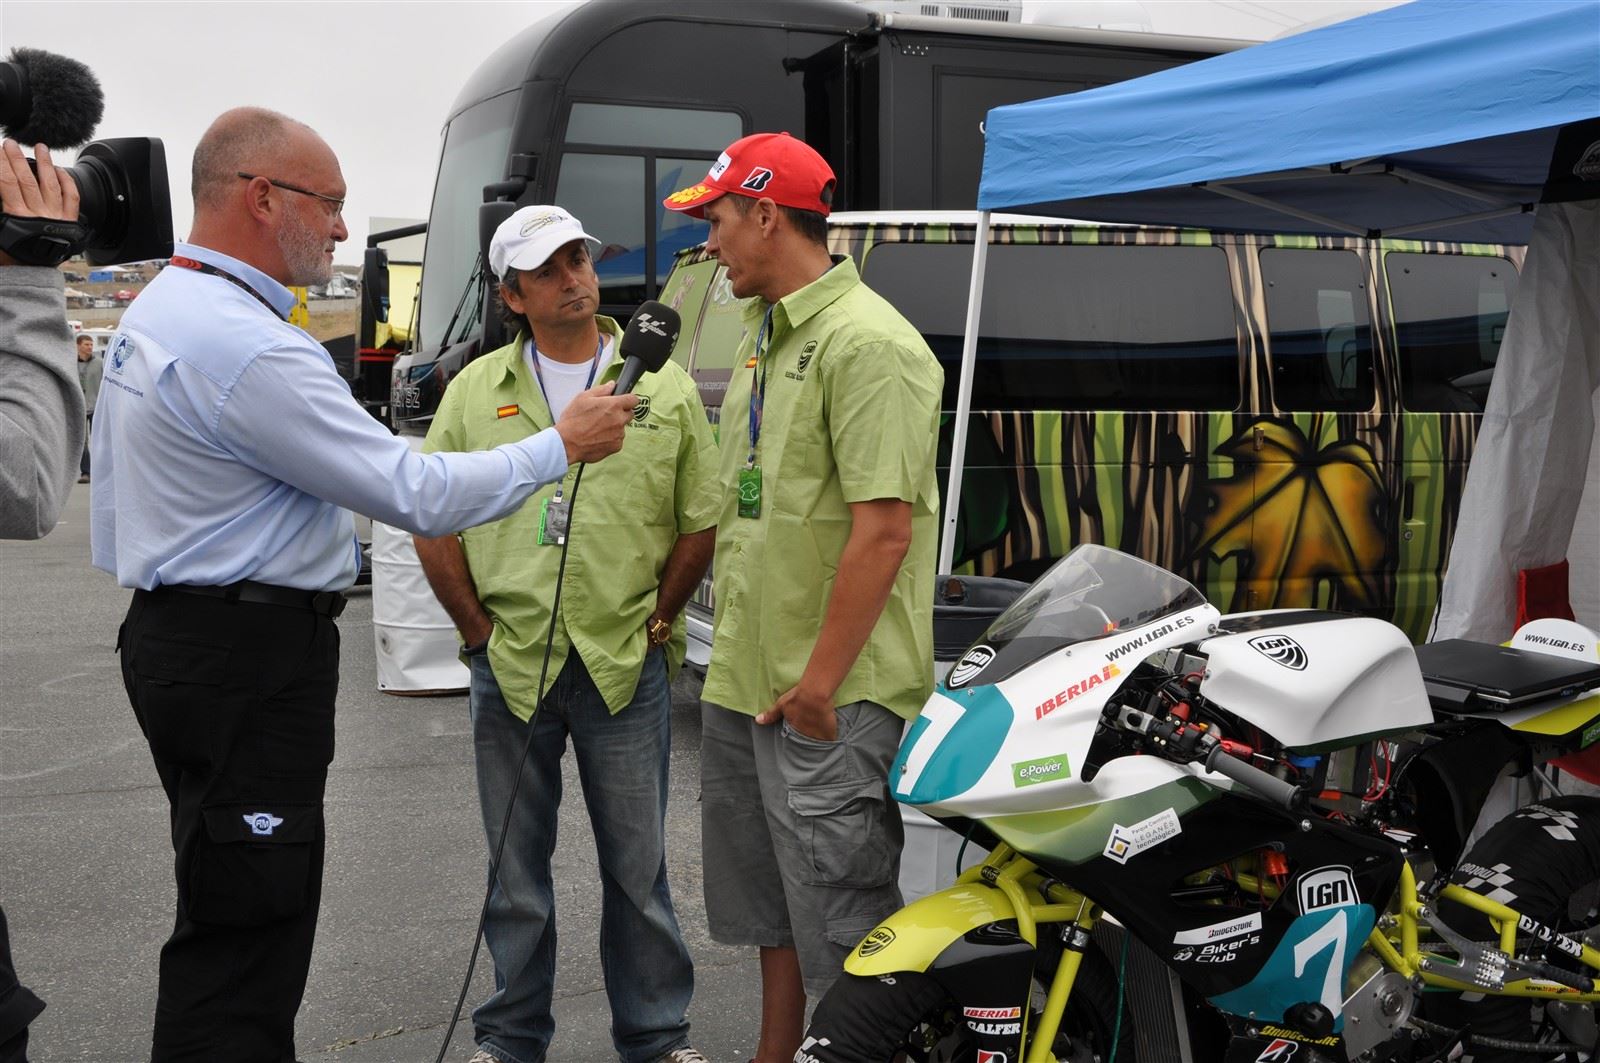 EP Designer Rolando Ortiz & LGN Team Pilot Marcelino Manzano being interviewed by FIM at the 2011 MotoGP Laguna Seca.